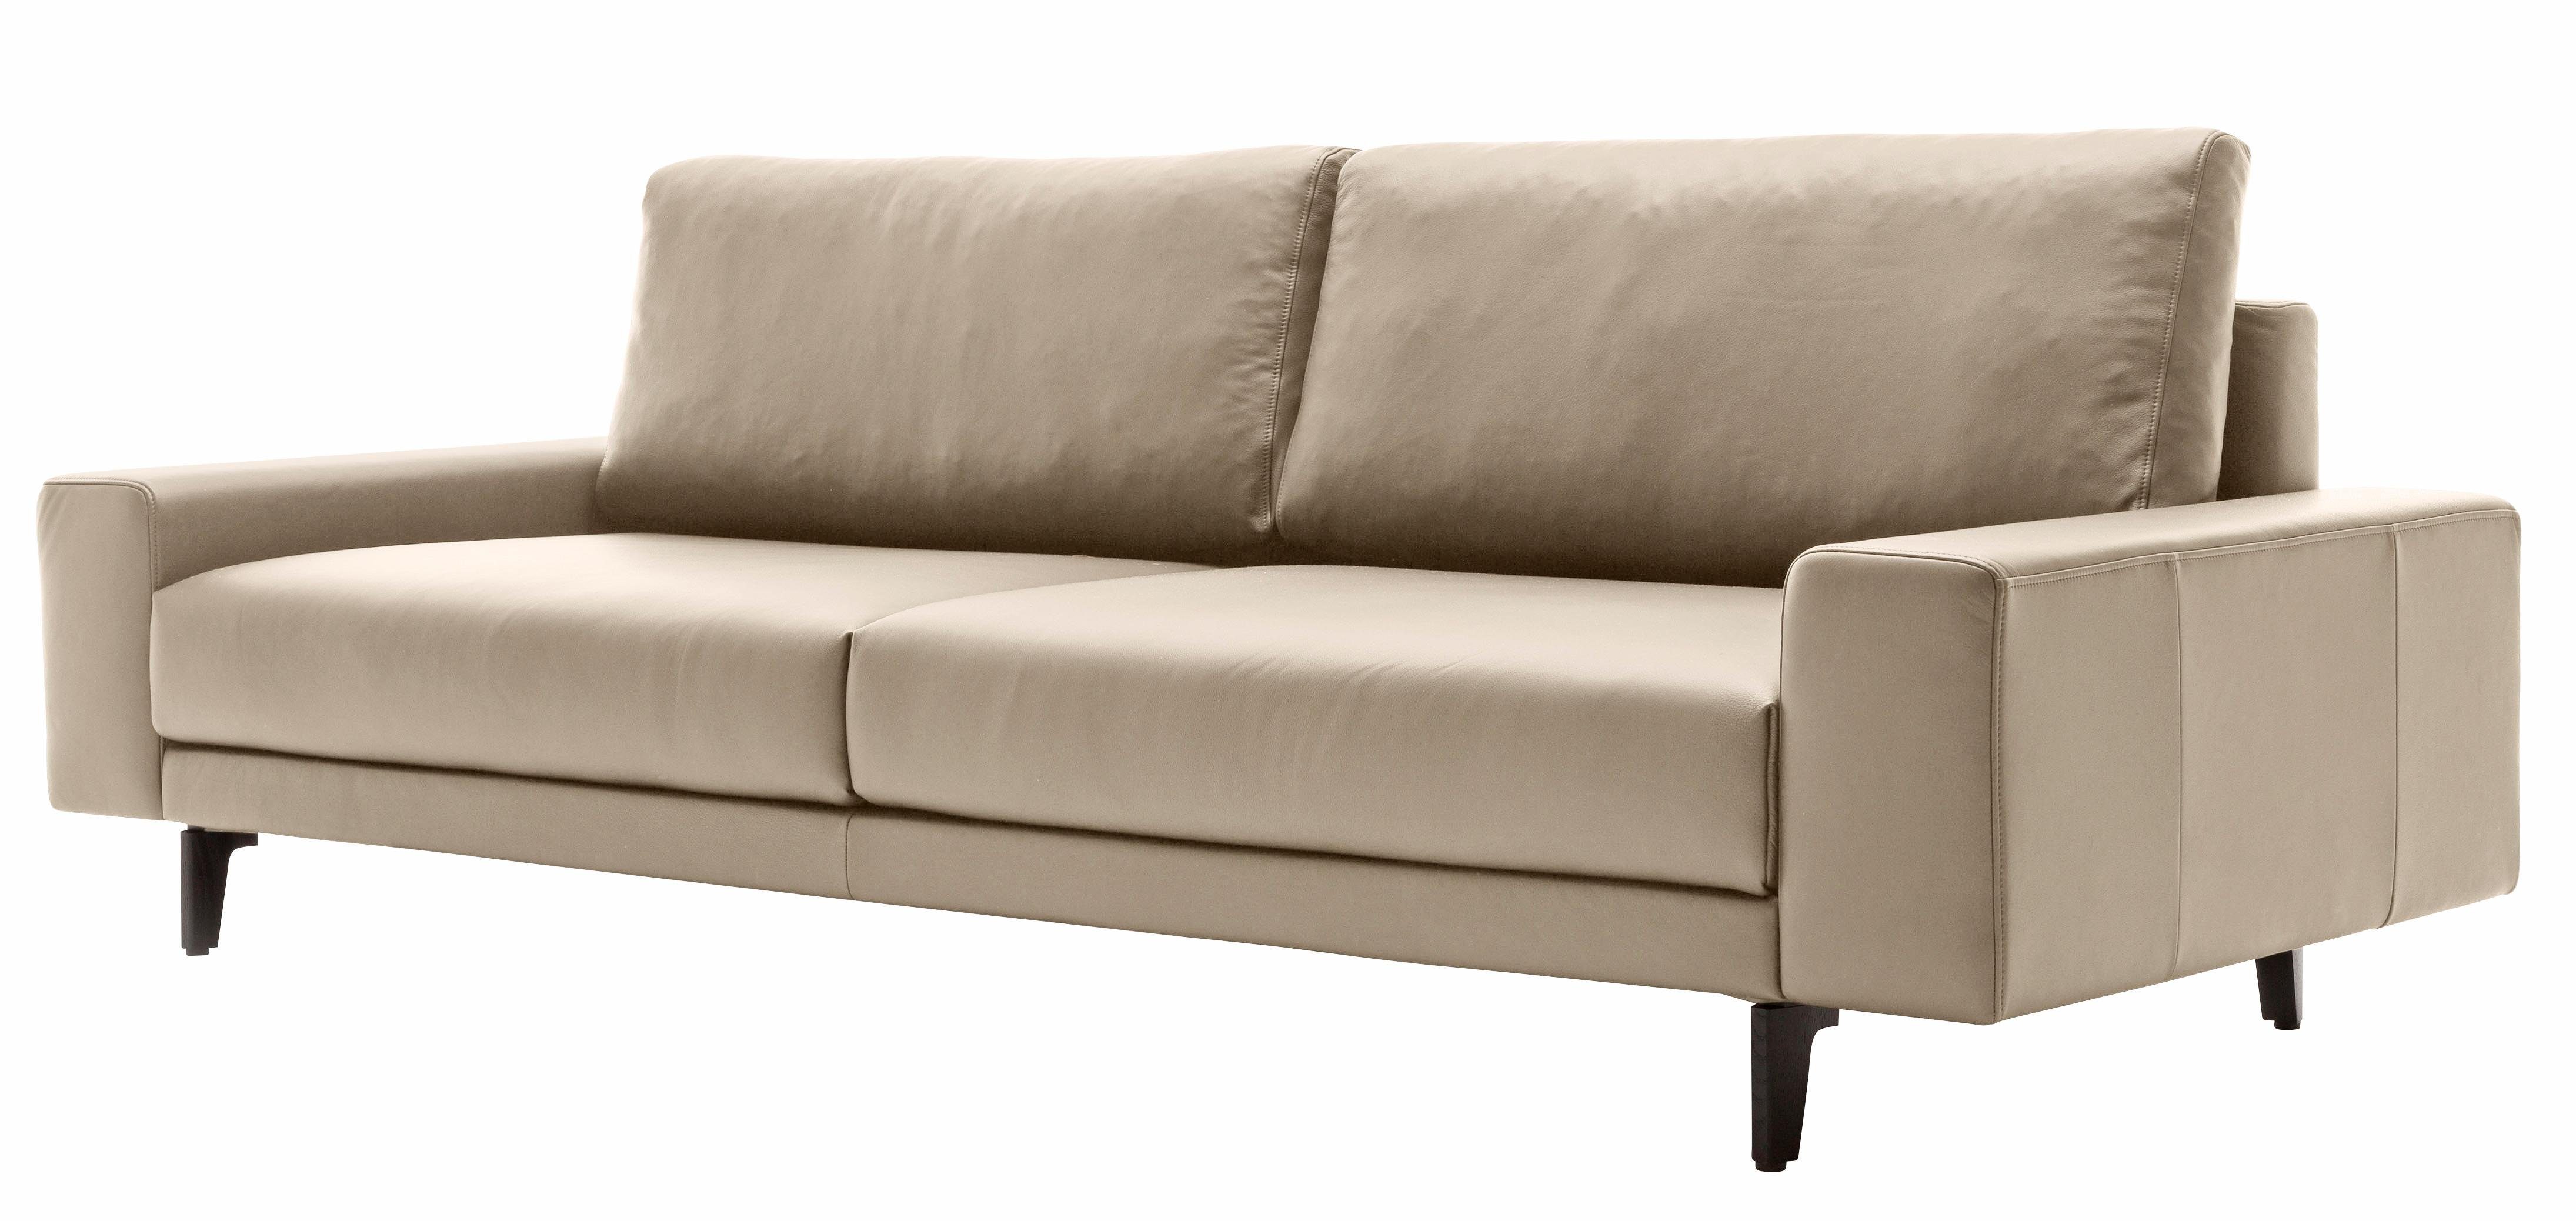 hülsta sofa 3-Sitzer hs.450, niedrig, umbragrau, Armlehne Breite Alugussfüße breit 220 in cm